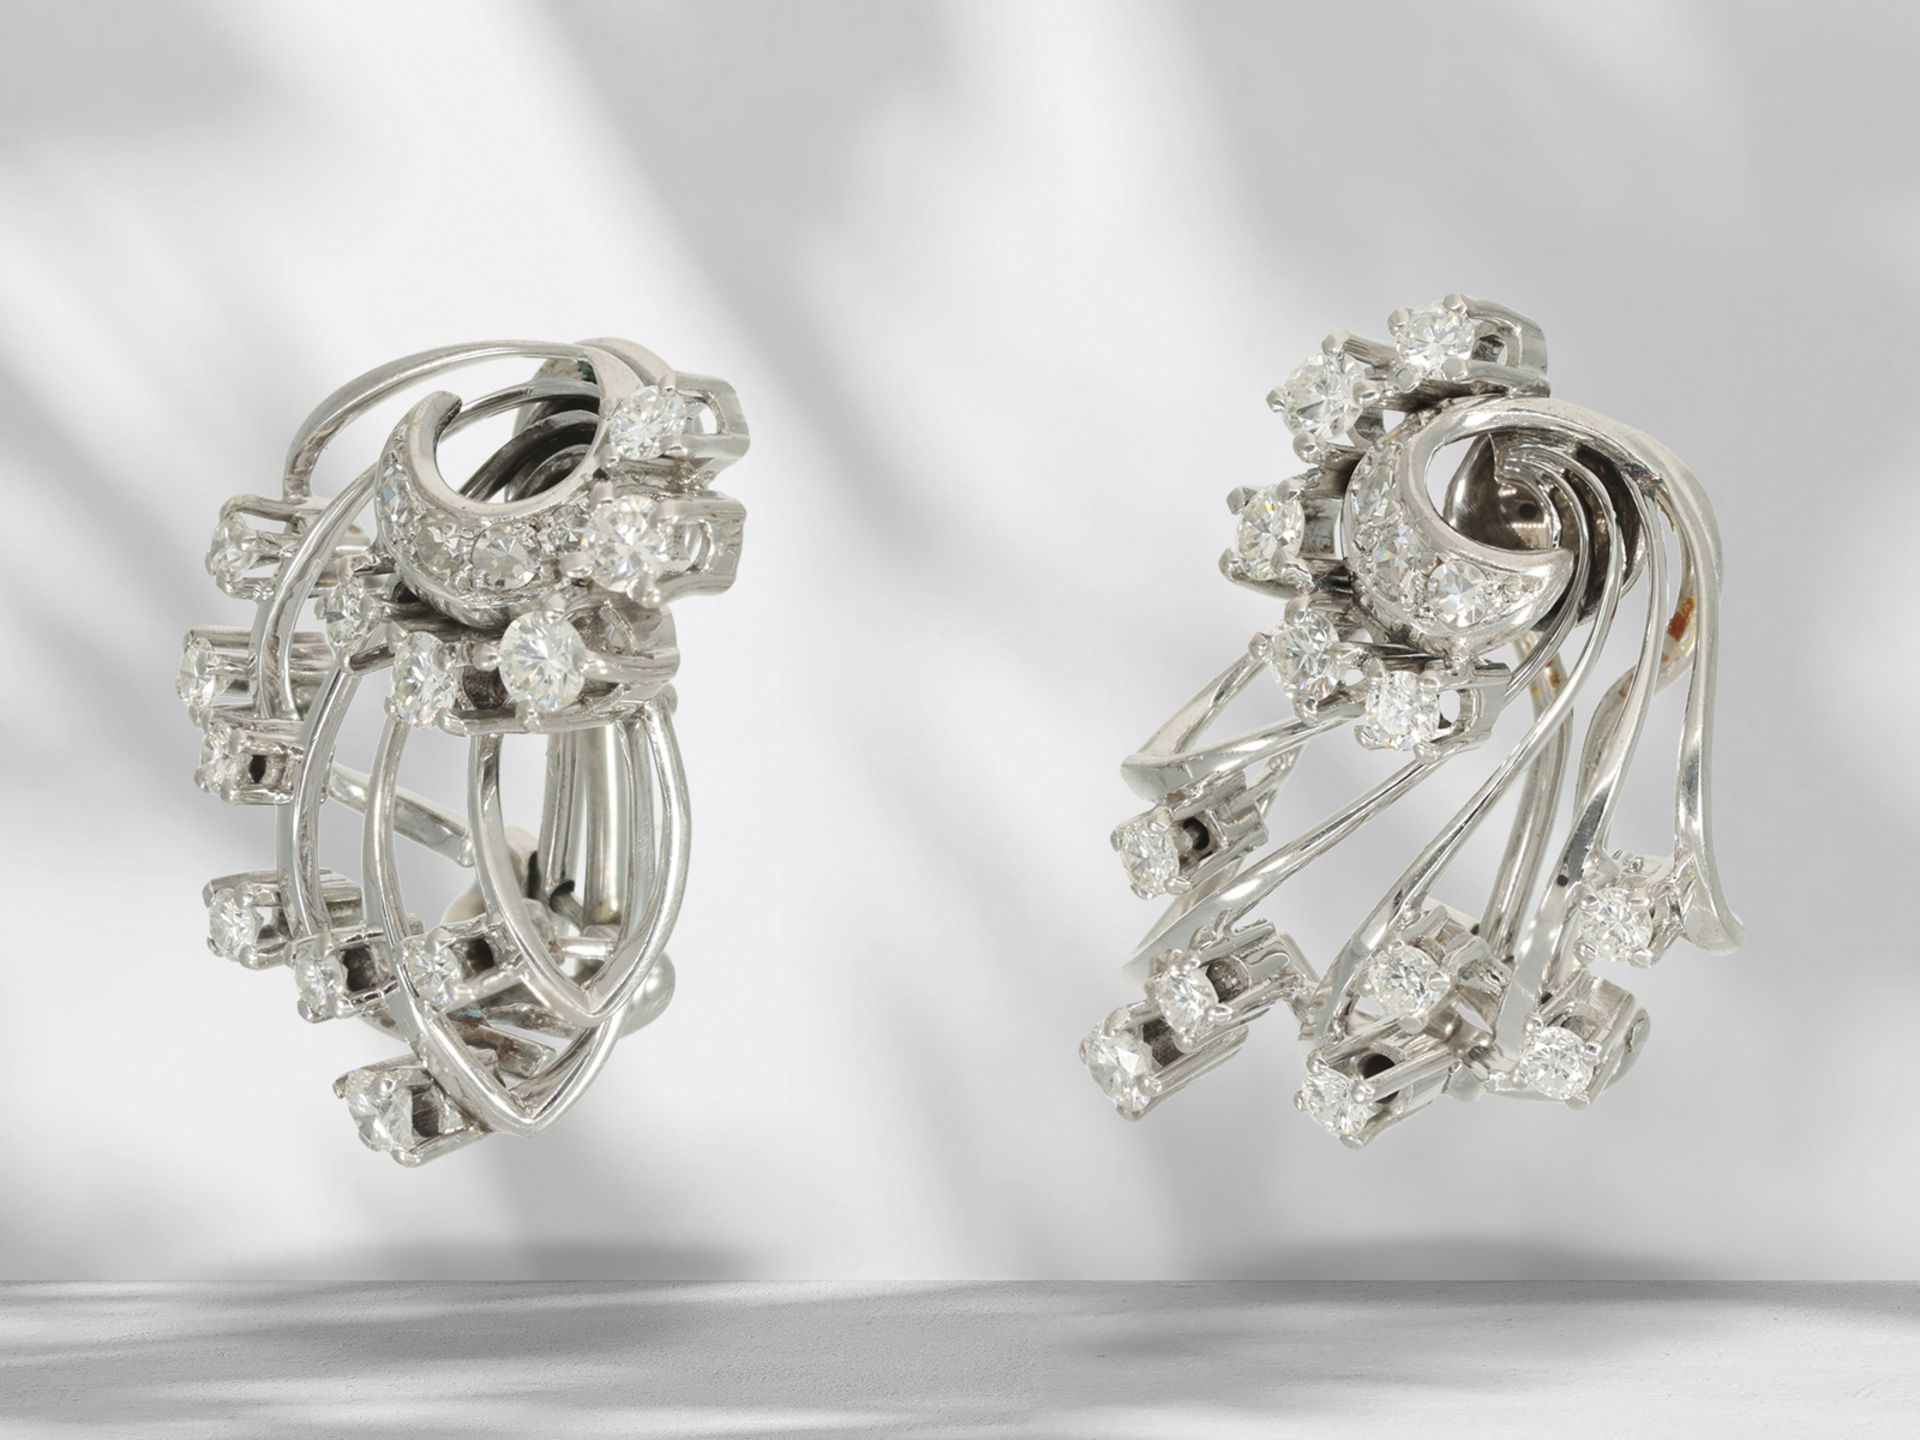 Earrings: decorative designer goldsmith work with brilliant-cut diamonds, 18K white gold, handmade b - Image 2 of 4